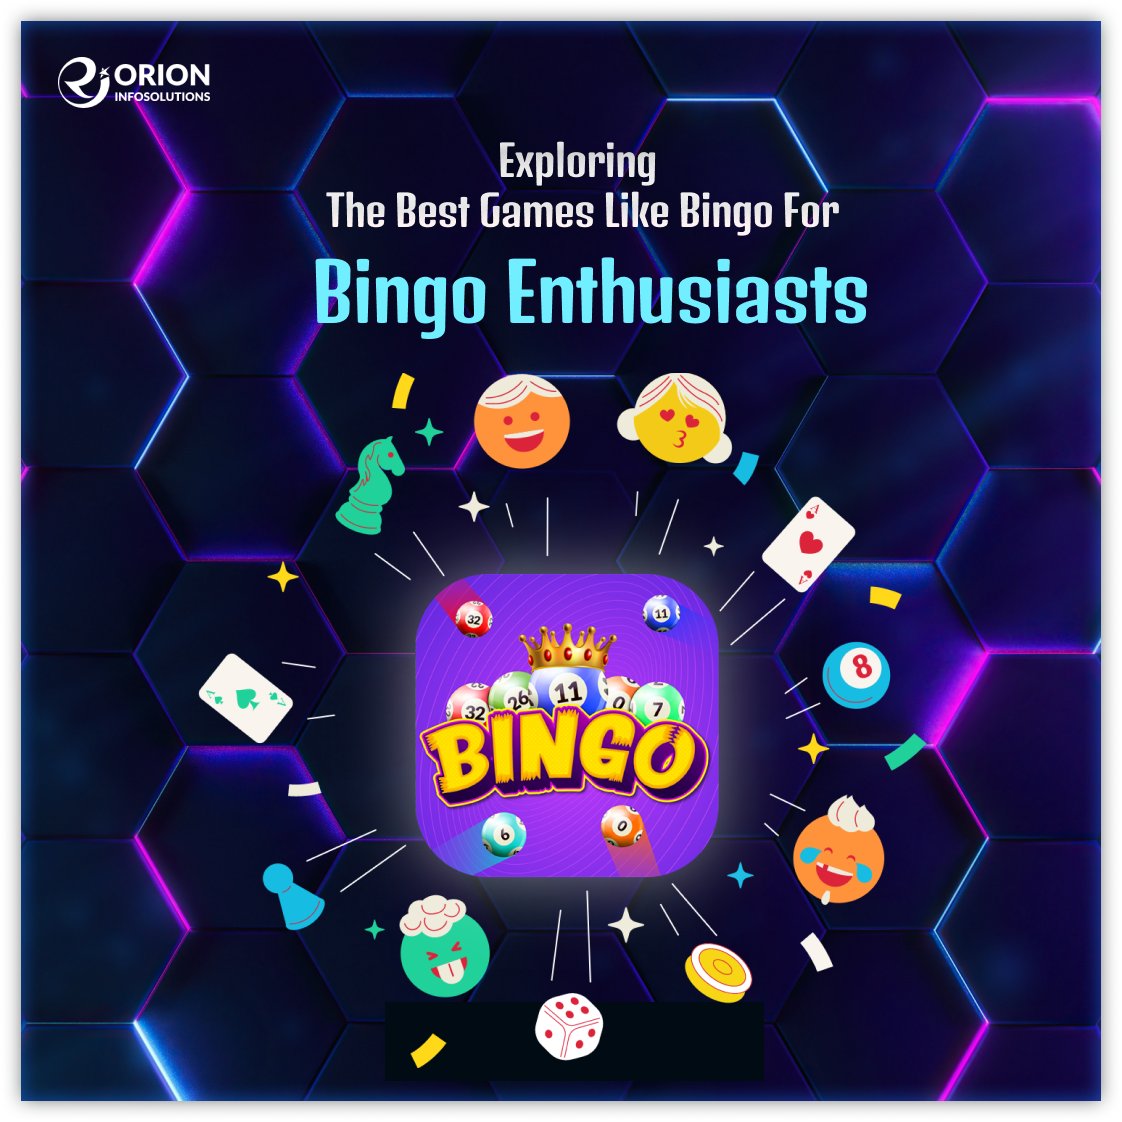 𝐄𝐱𝐩𝐥𝐨𝐫𝐢𝐧𝐠 𝐭𝐡𝐞 𝐁𝐞𝐬𝐭 𝐆𝐚𝐦𝐞𝐬 𝐋𝐢𝐤𝐞 𝐁𝐢𝐧𝐠𝐨 𝐟𝐨𝐫 𝐁𝐢𝐧𝐠𝐨 𝐄𝐧𝐭𝐡𝐮𝐬𝐢𝐚𝐬𝐭𝐬

𝐂𝐥𝐢𝐜𝐤 𝐇𝐞𝐫𝐞: orioninfosolutions.com/blog/games-lik…

#bingolover #bingoball #bingonight #bingoaddict #bingotime #bingofun #bingobonanza #bingowinner #wordgames #numbergames